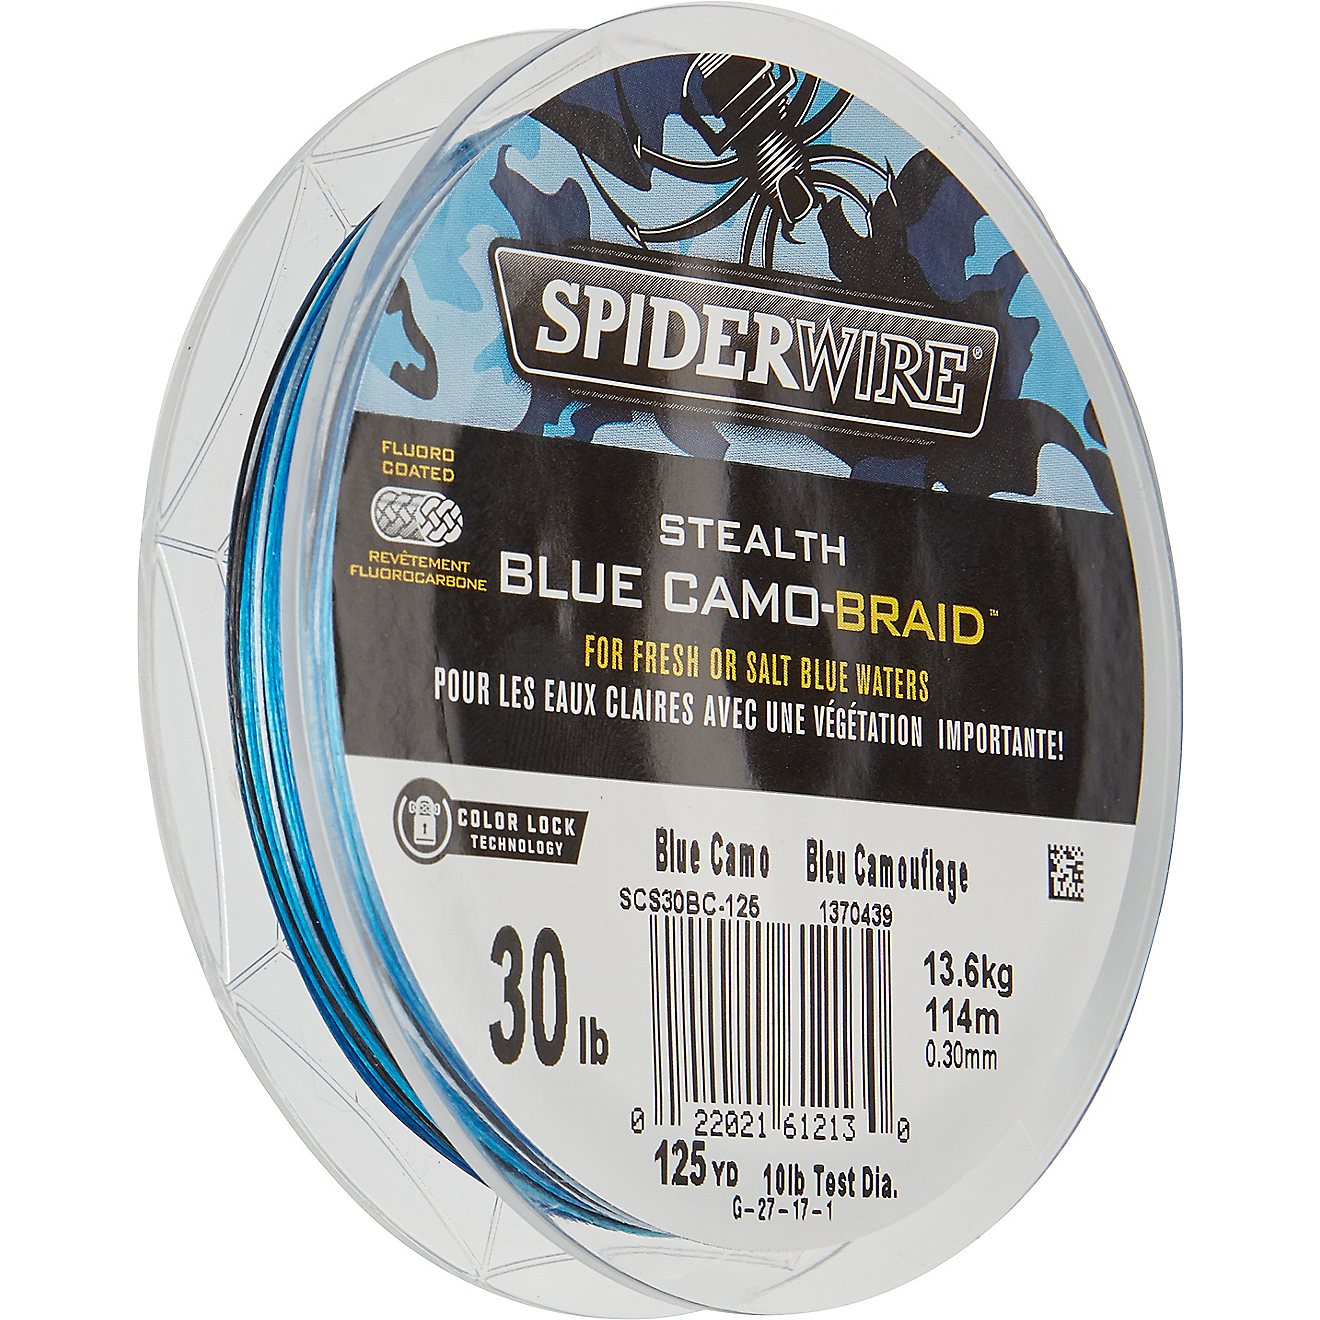 Spiderwire Stealth Blue Camo-Braid - 125 yards Braided Fishing